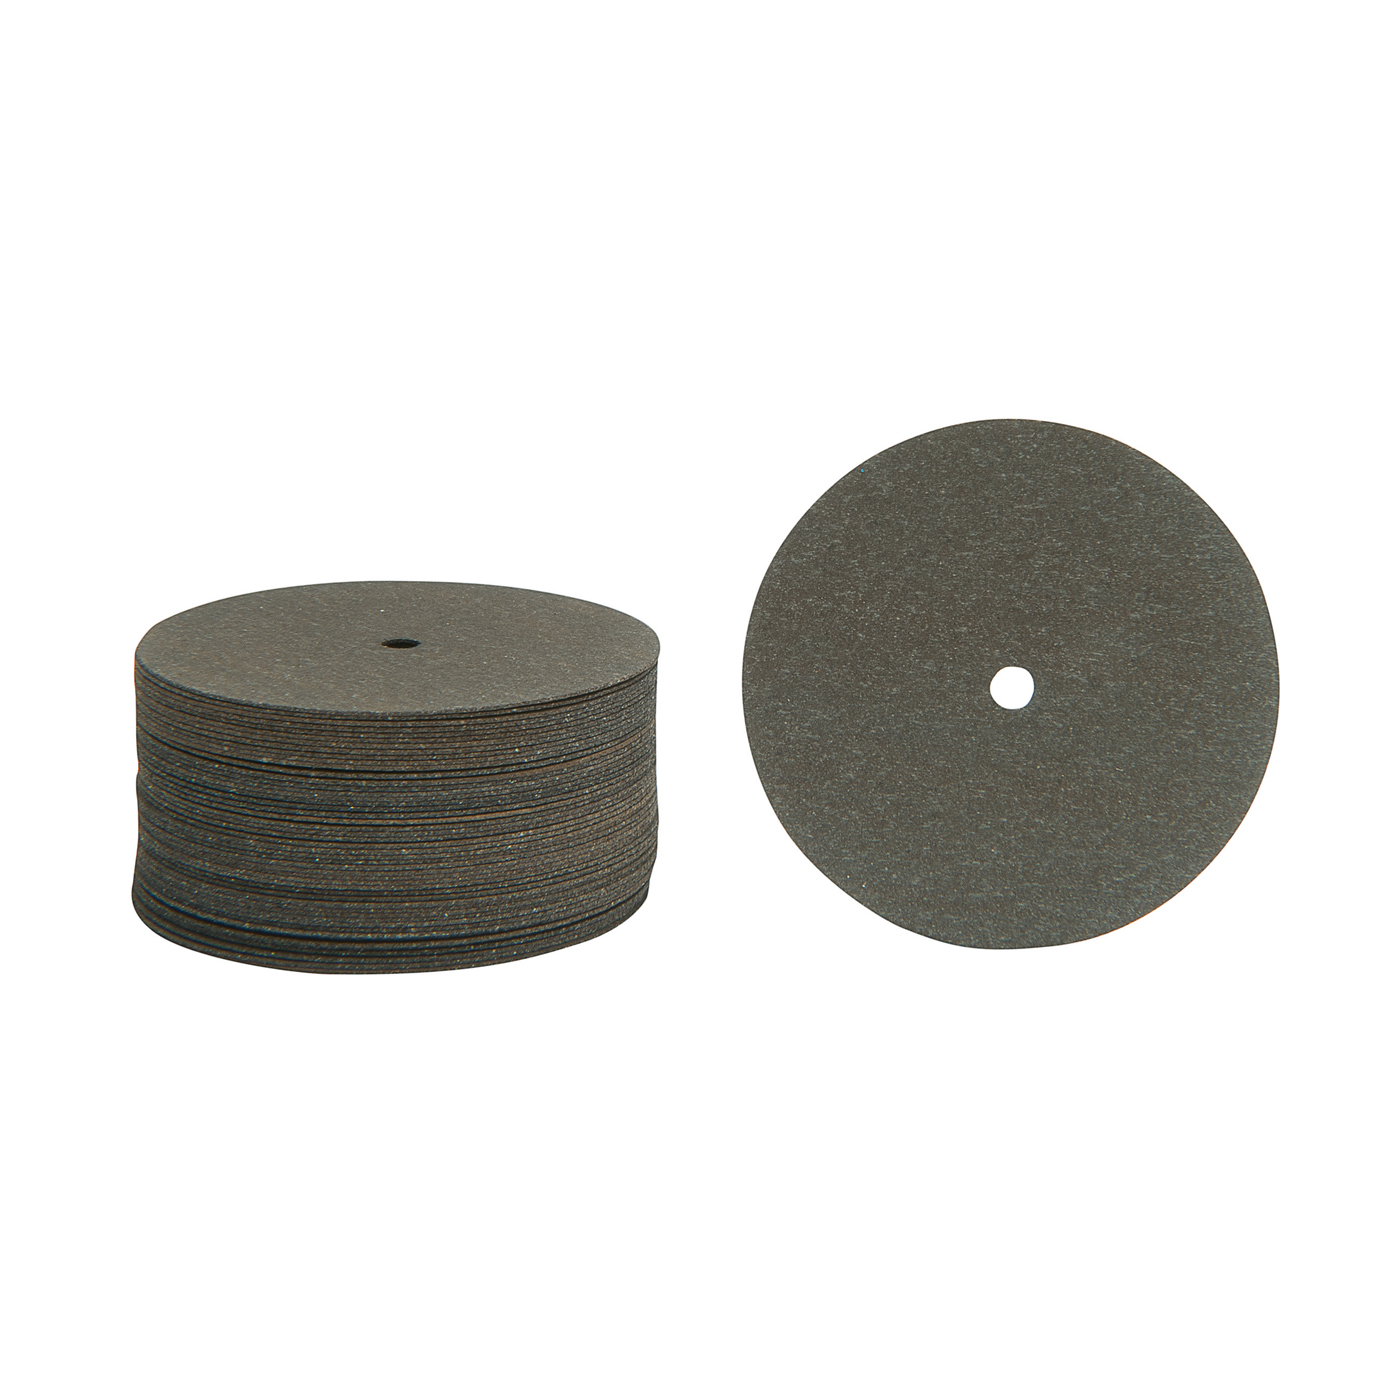 FINODISC C Separating Discs, ø 22 x 0.2 mm - 100 pieces